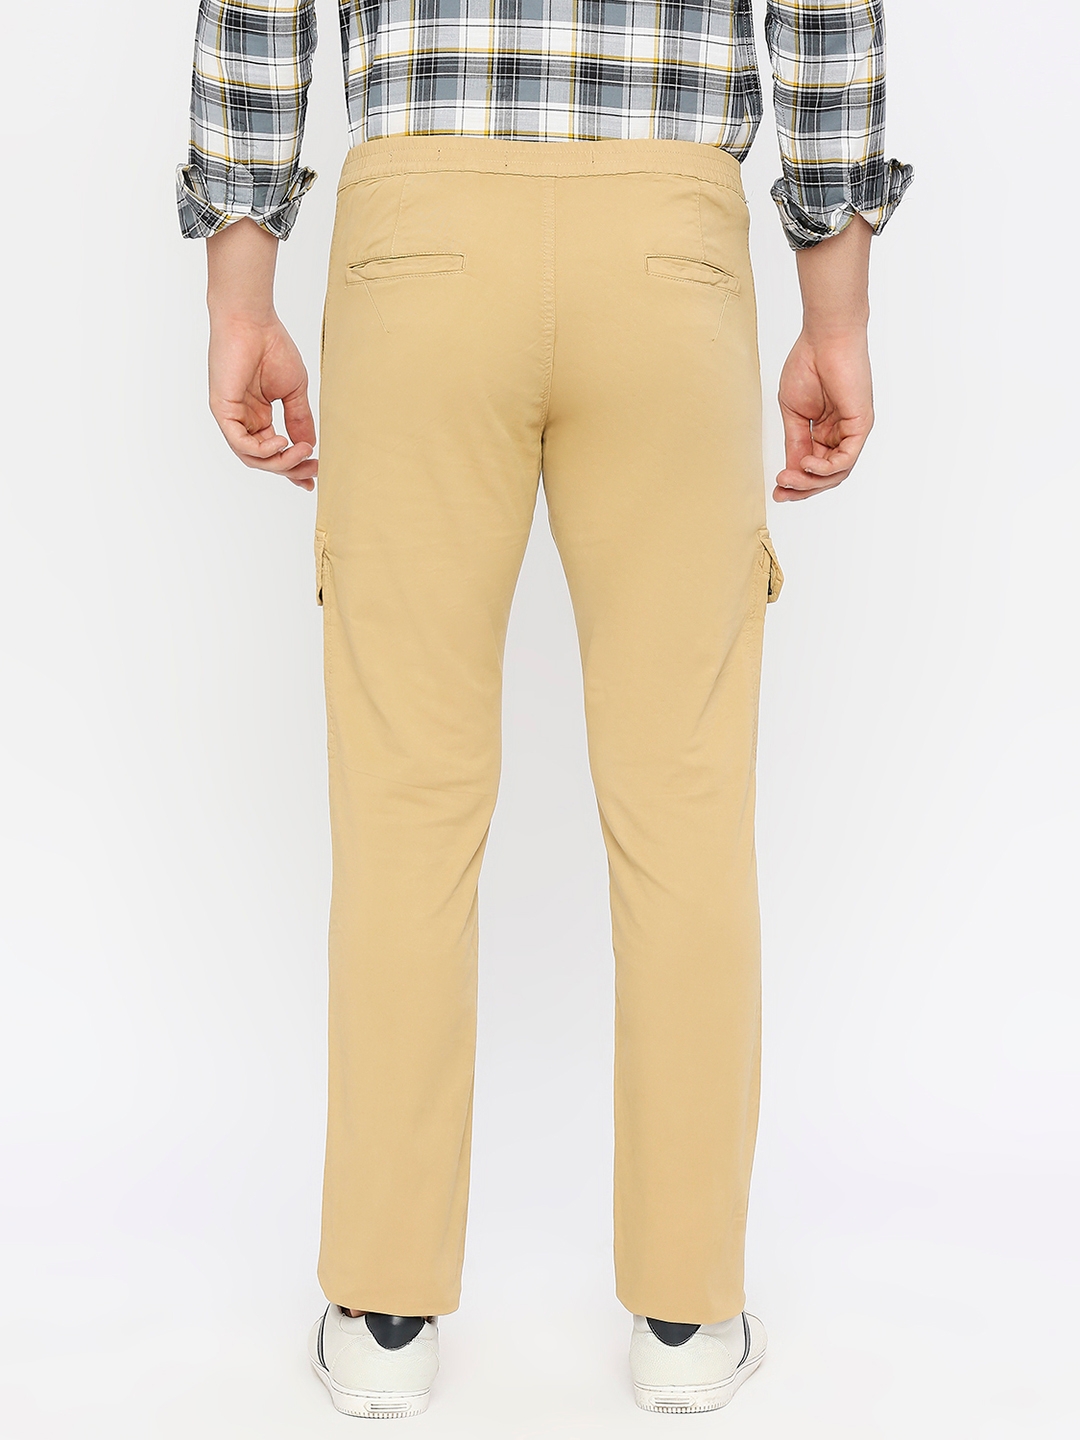 spykar | Spykar Men Light Khaki Cotton Slim Fit Ankle Length Plain Trousers 3